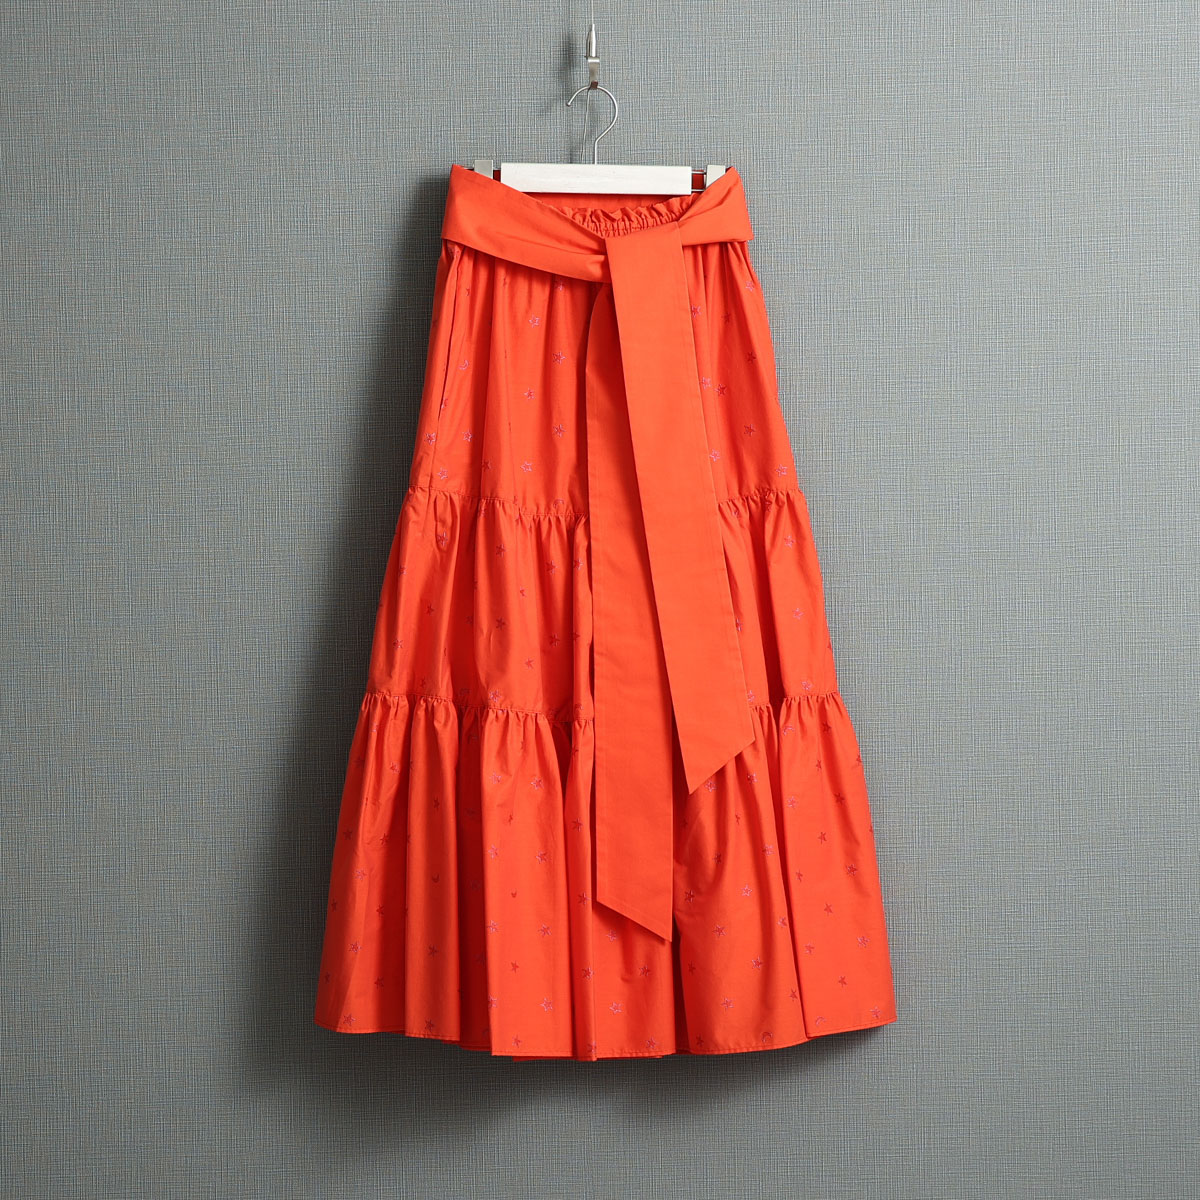 『Stella polka dot』 tiered long skirt ORANGE画像